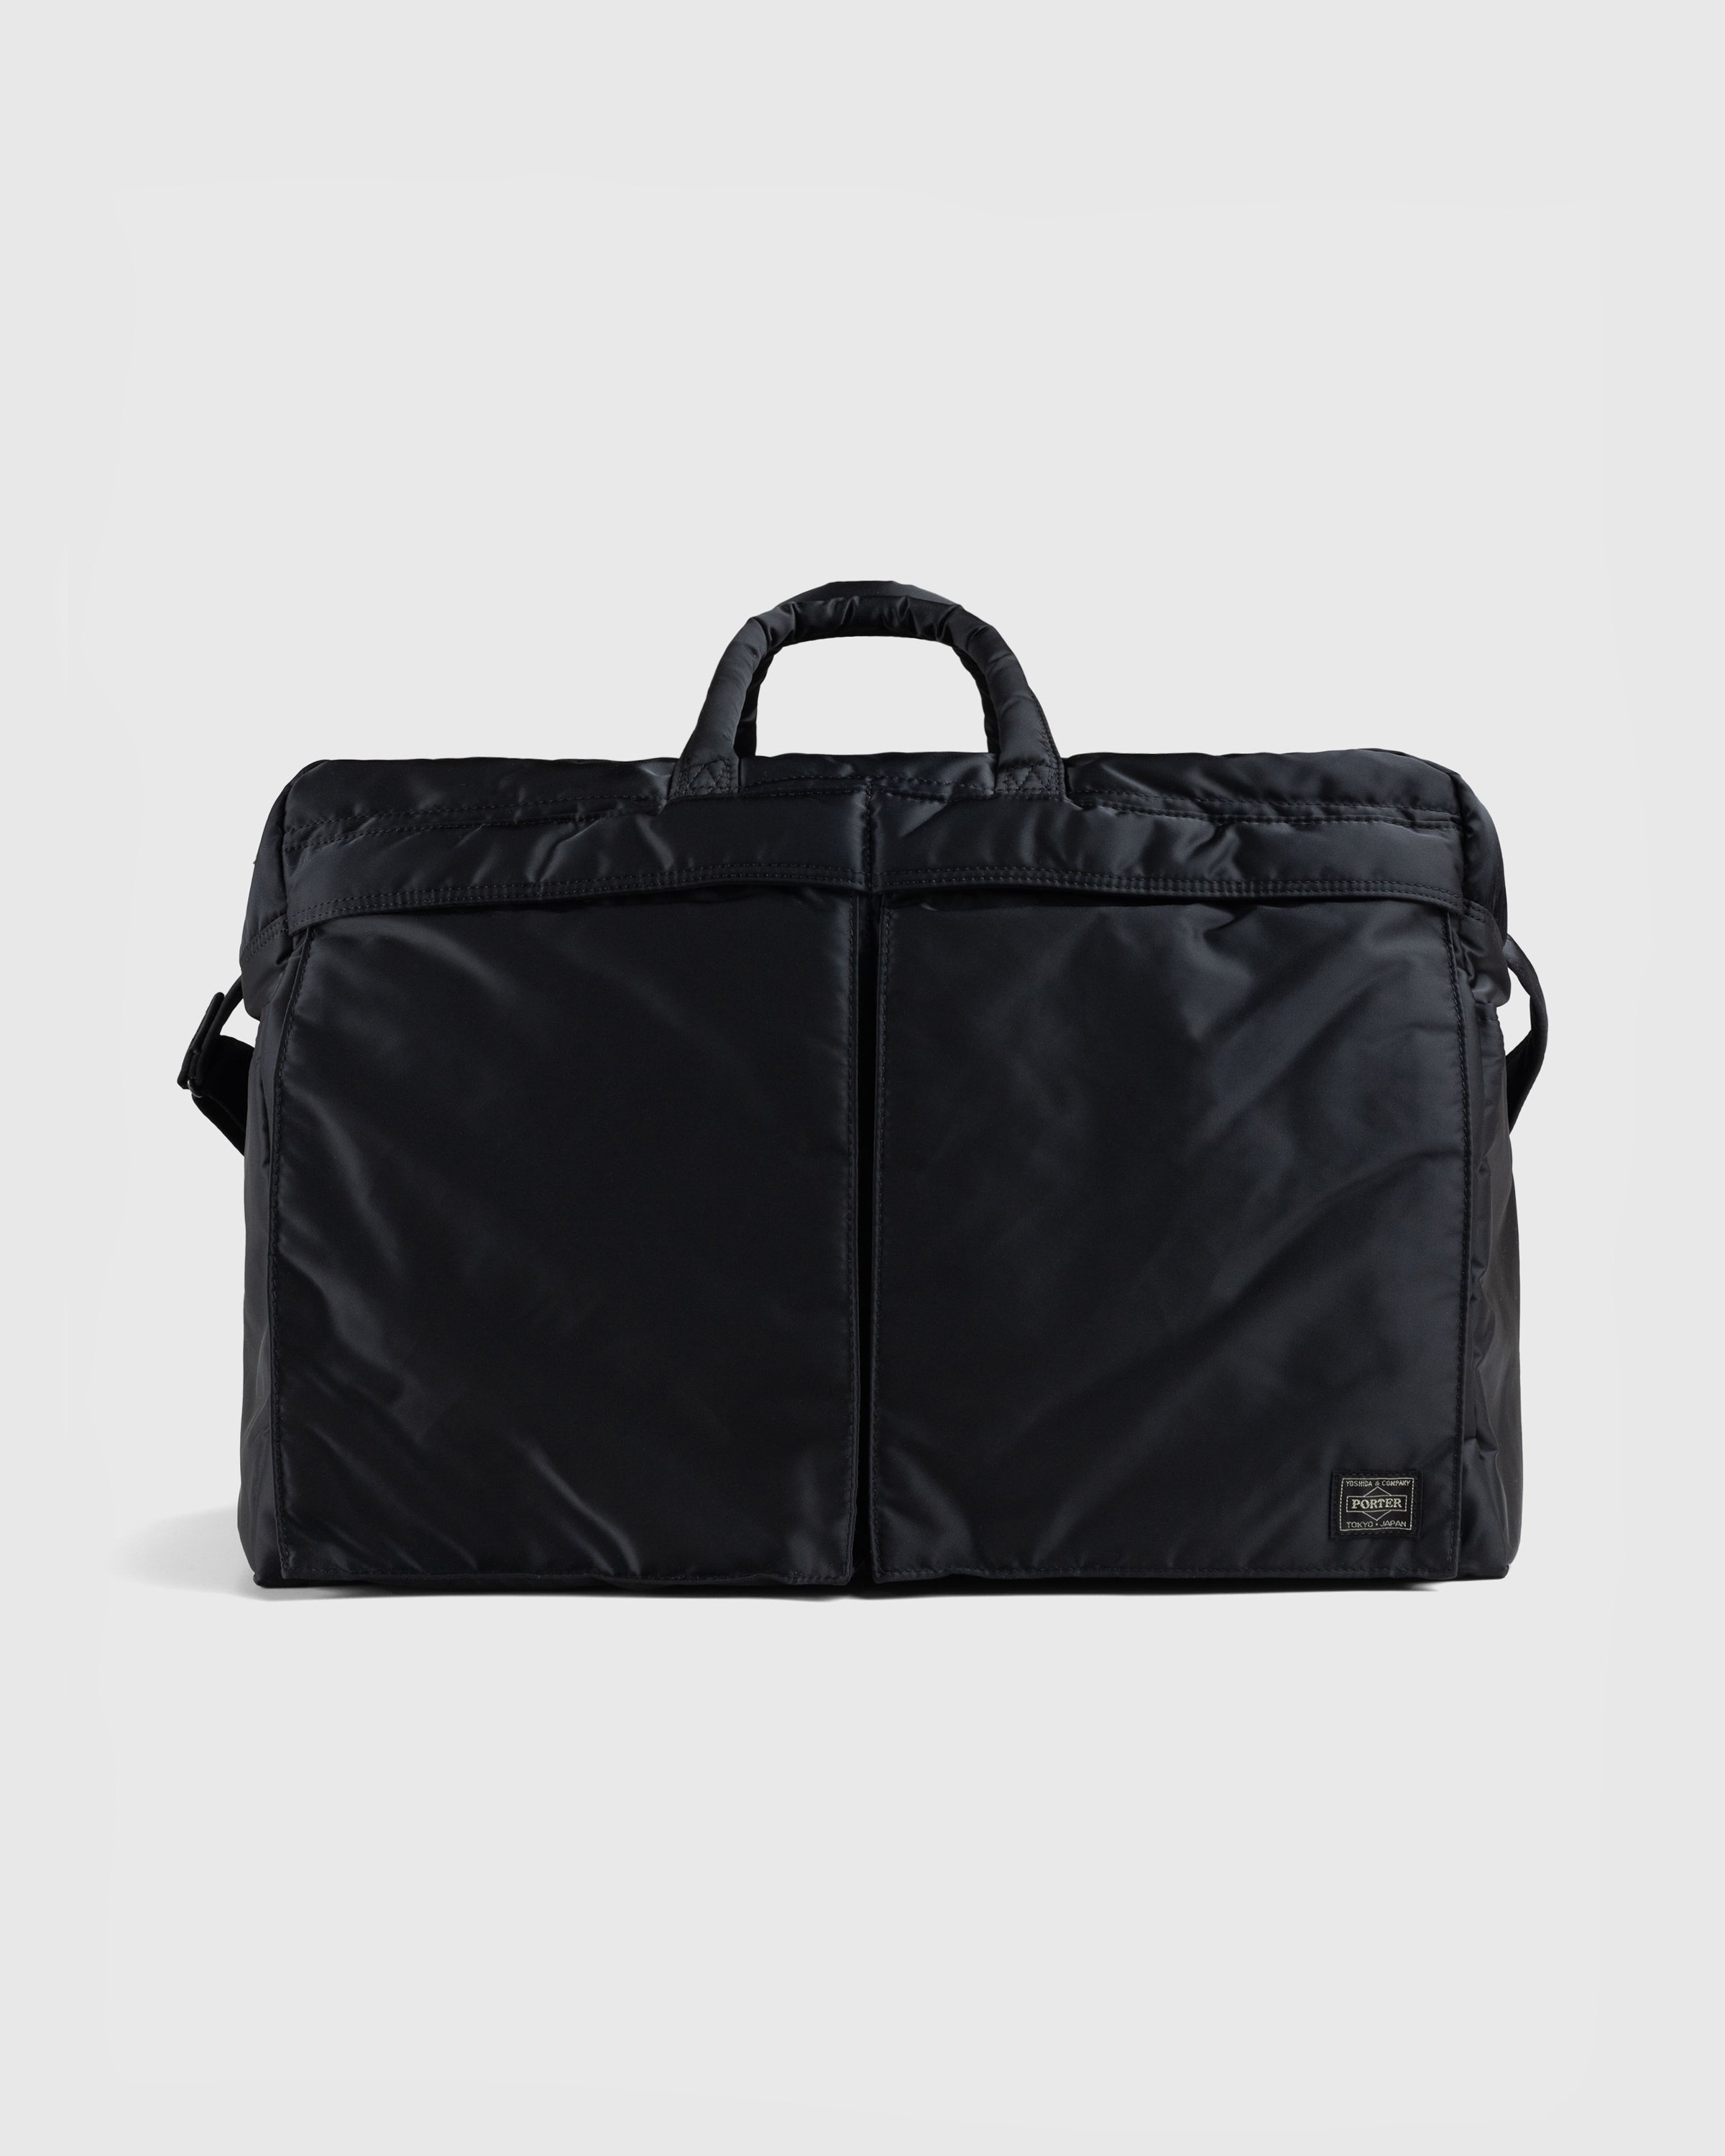 Porter-Yoshida & Co. – Tanker 2-Way Duffle Bag (S) Black